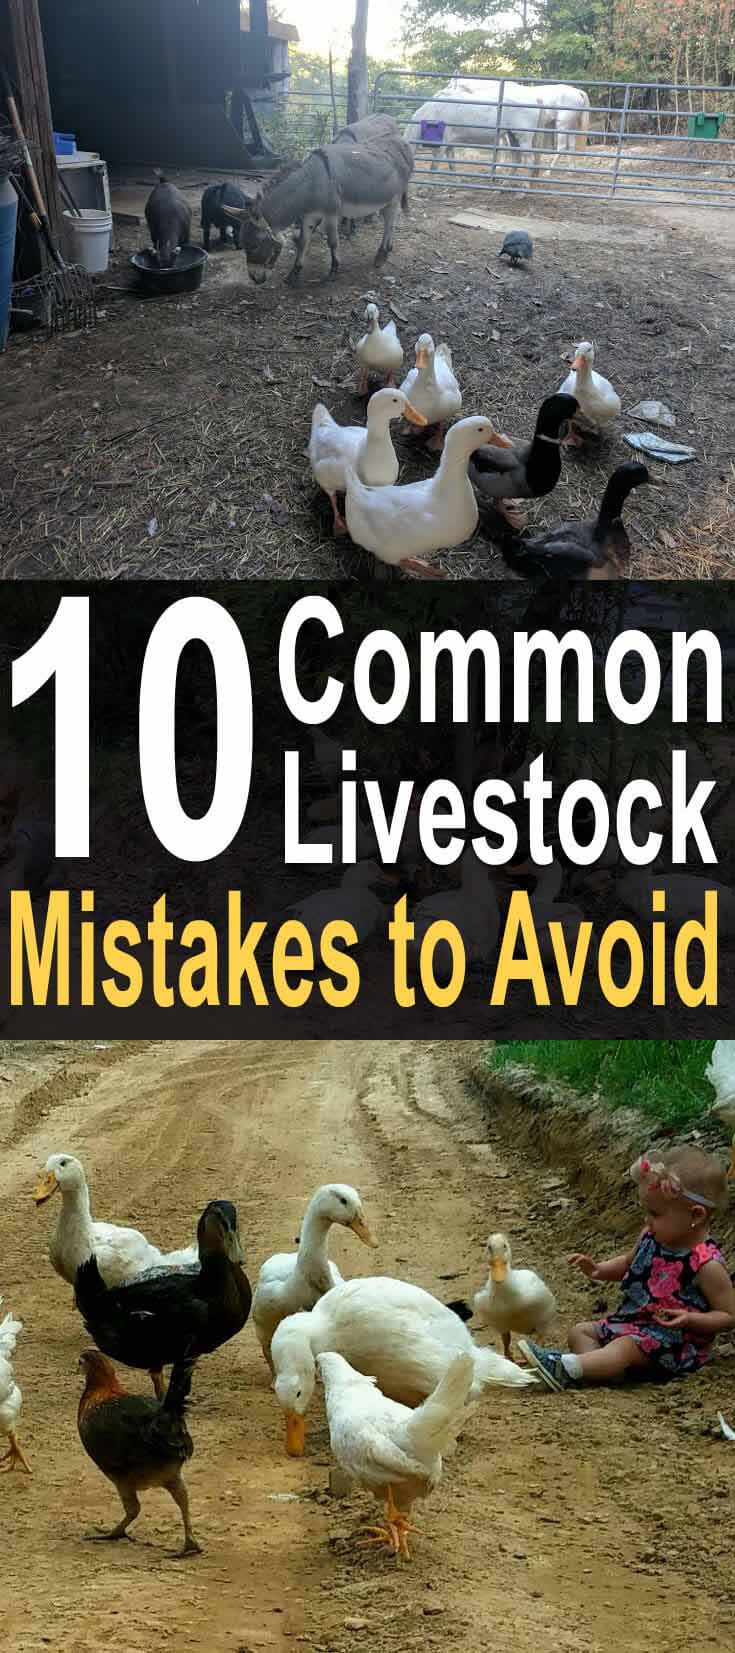 10 Common Livestock Mistakes to Avoid